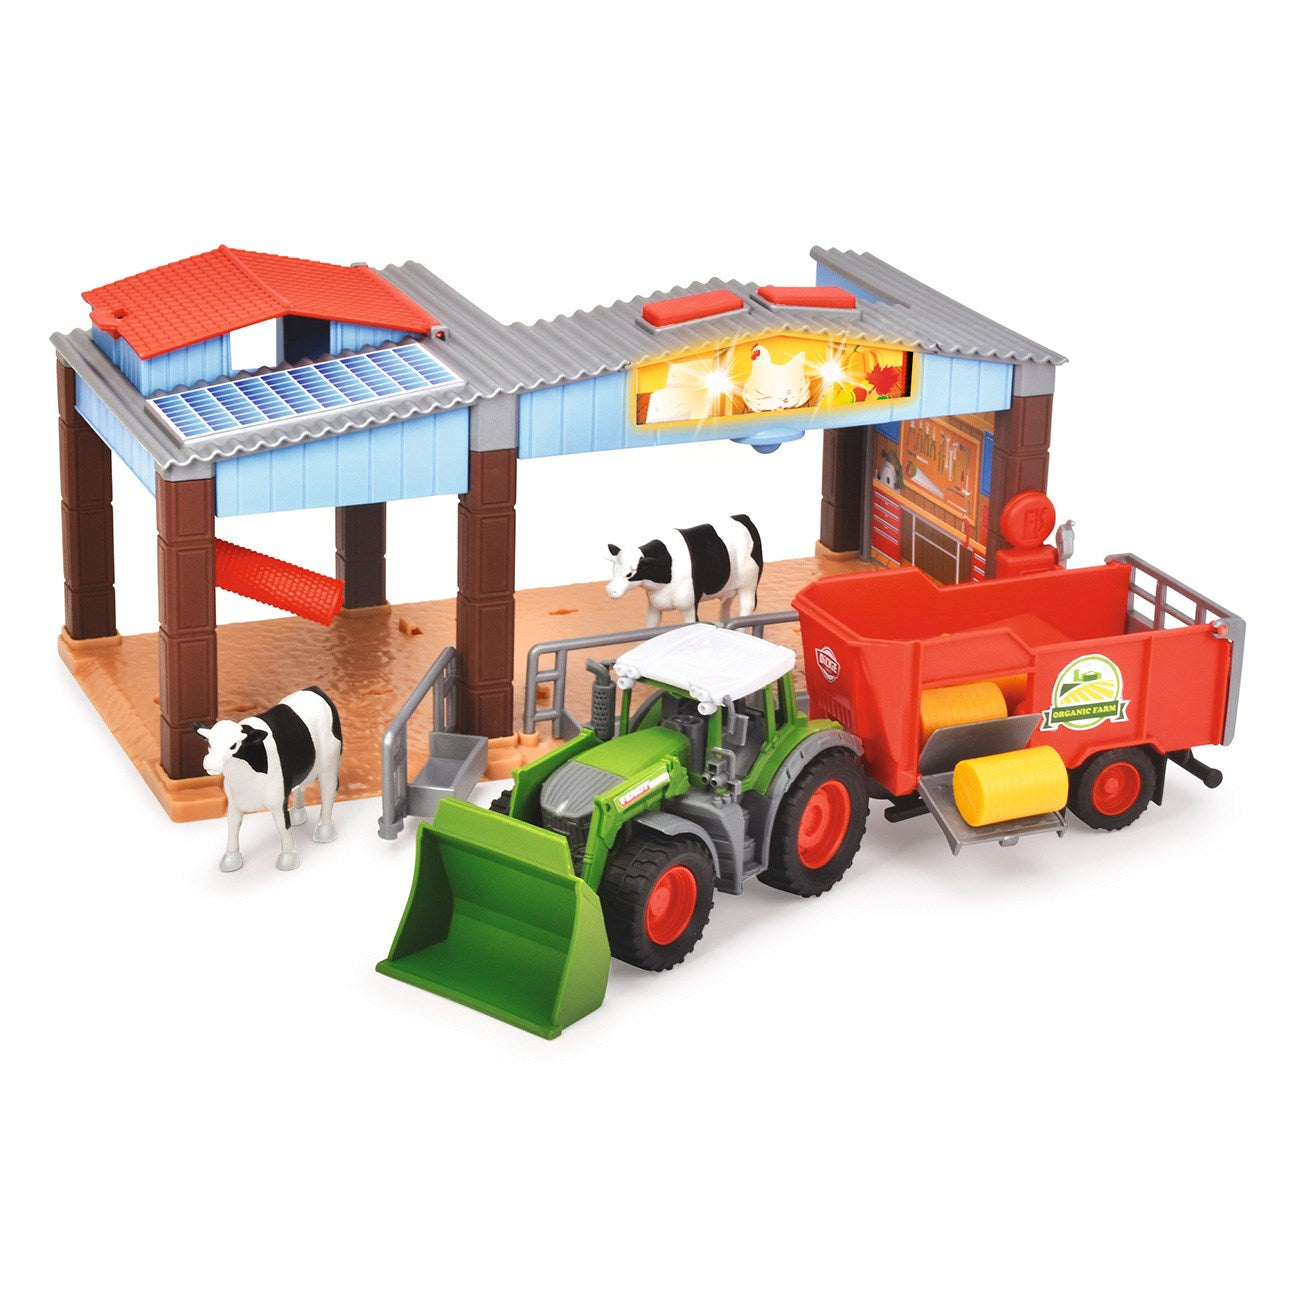 Dickie Toys Farmhouse Station